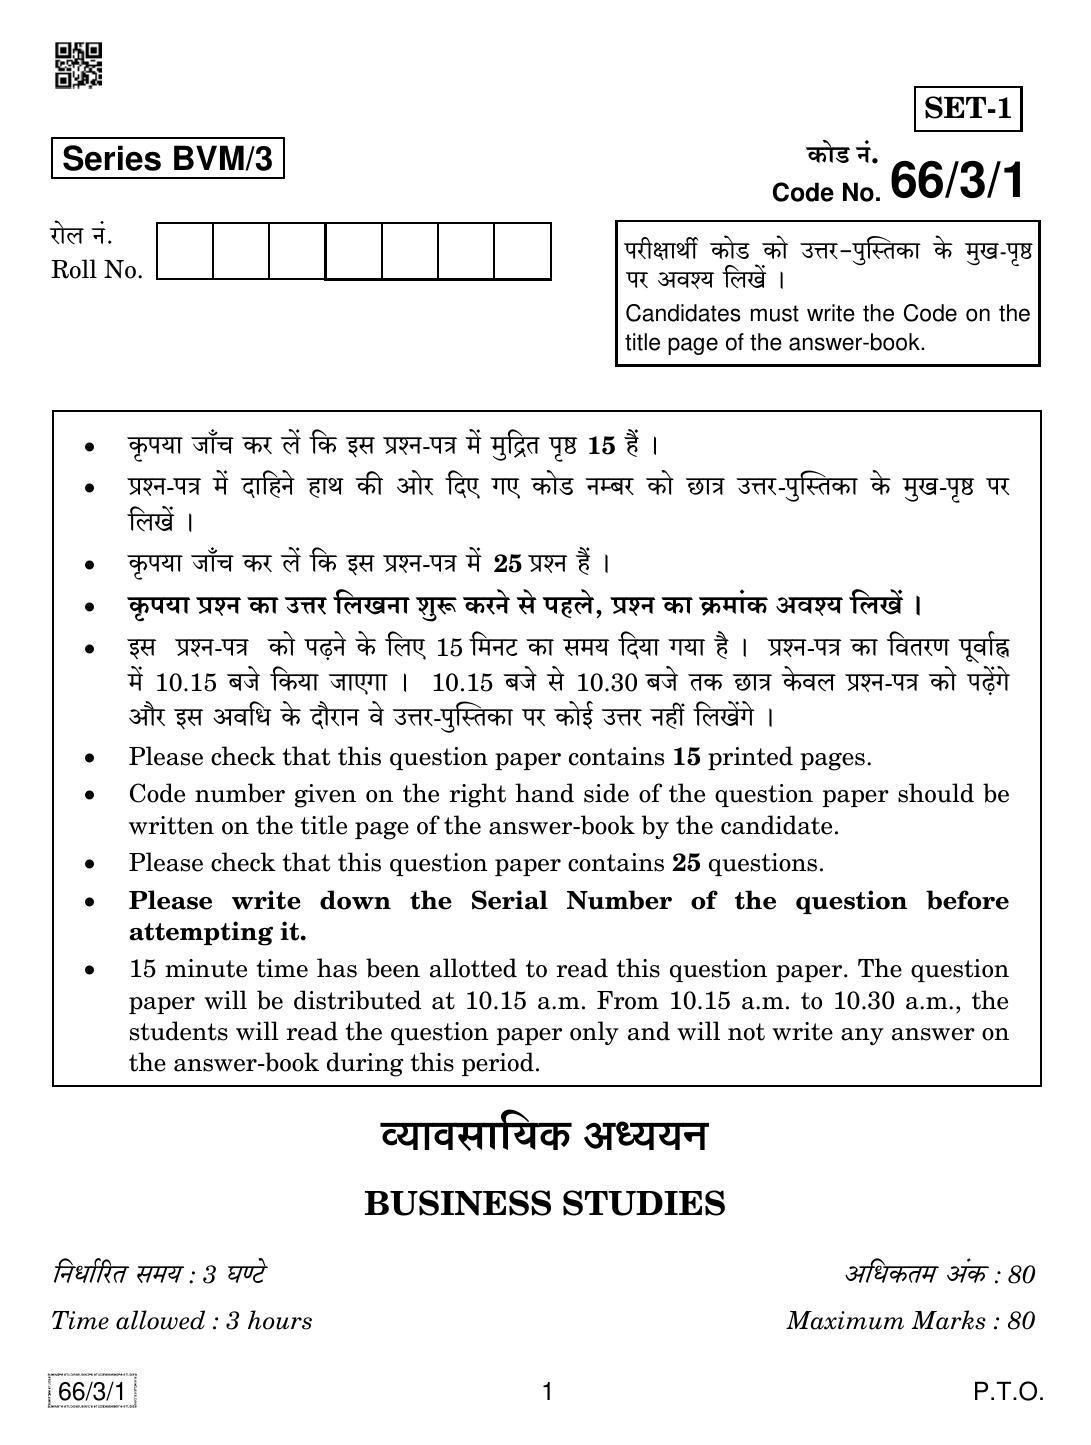 CBSE Class 12 66-3-1 Business Studies 2019 Question Paper - Page 1